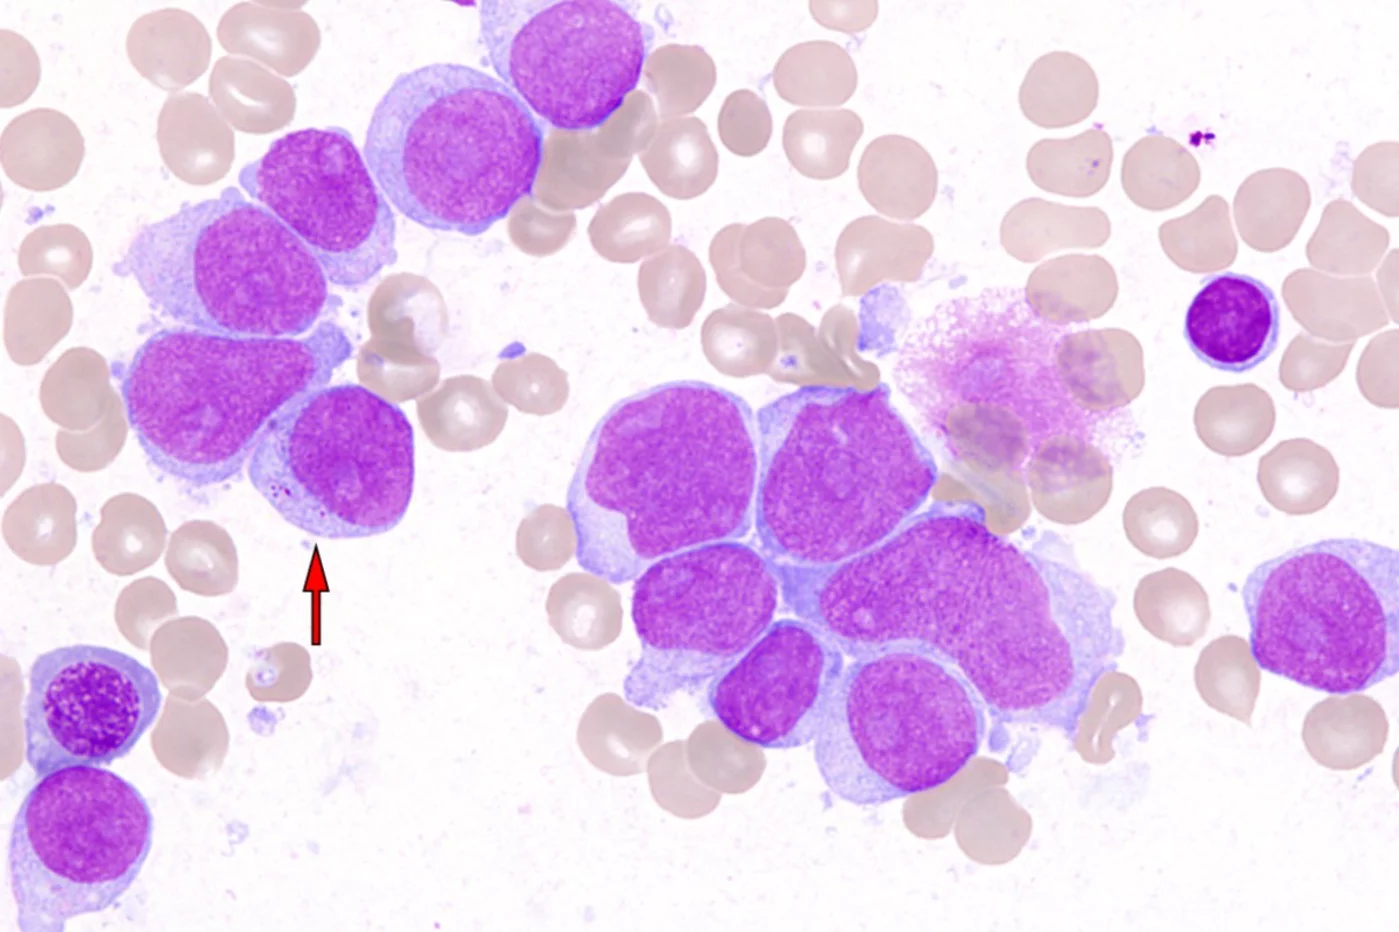 Leucemia mieloide aguda. Imagen: ATLAS OF HAEMATOLOGICAL CYTOLOGY.